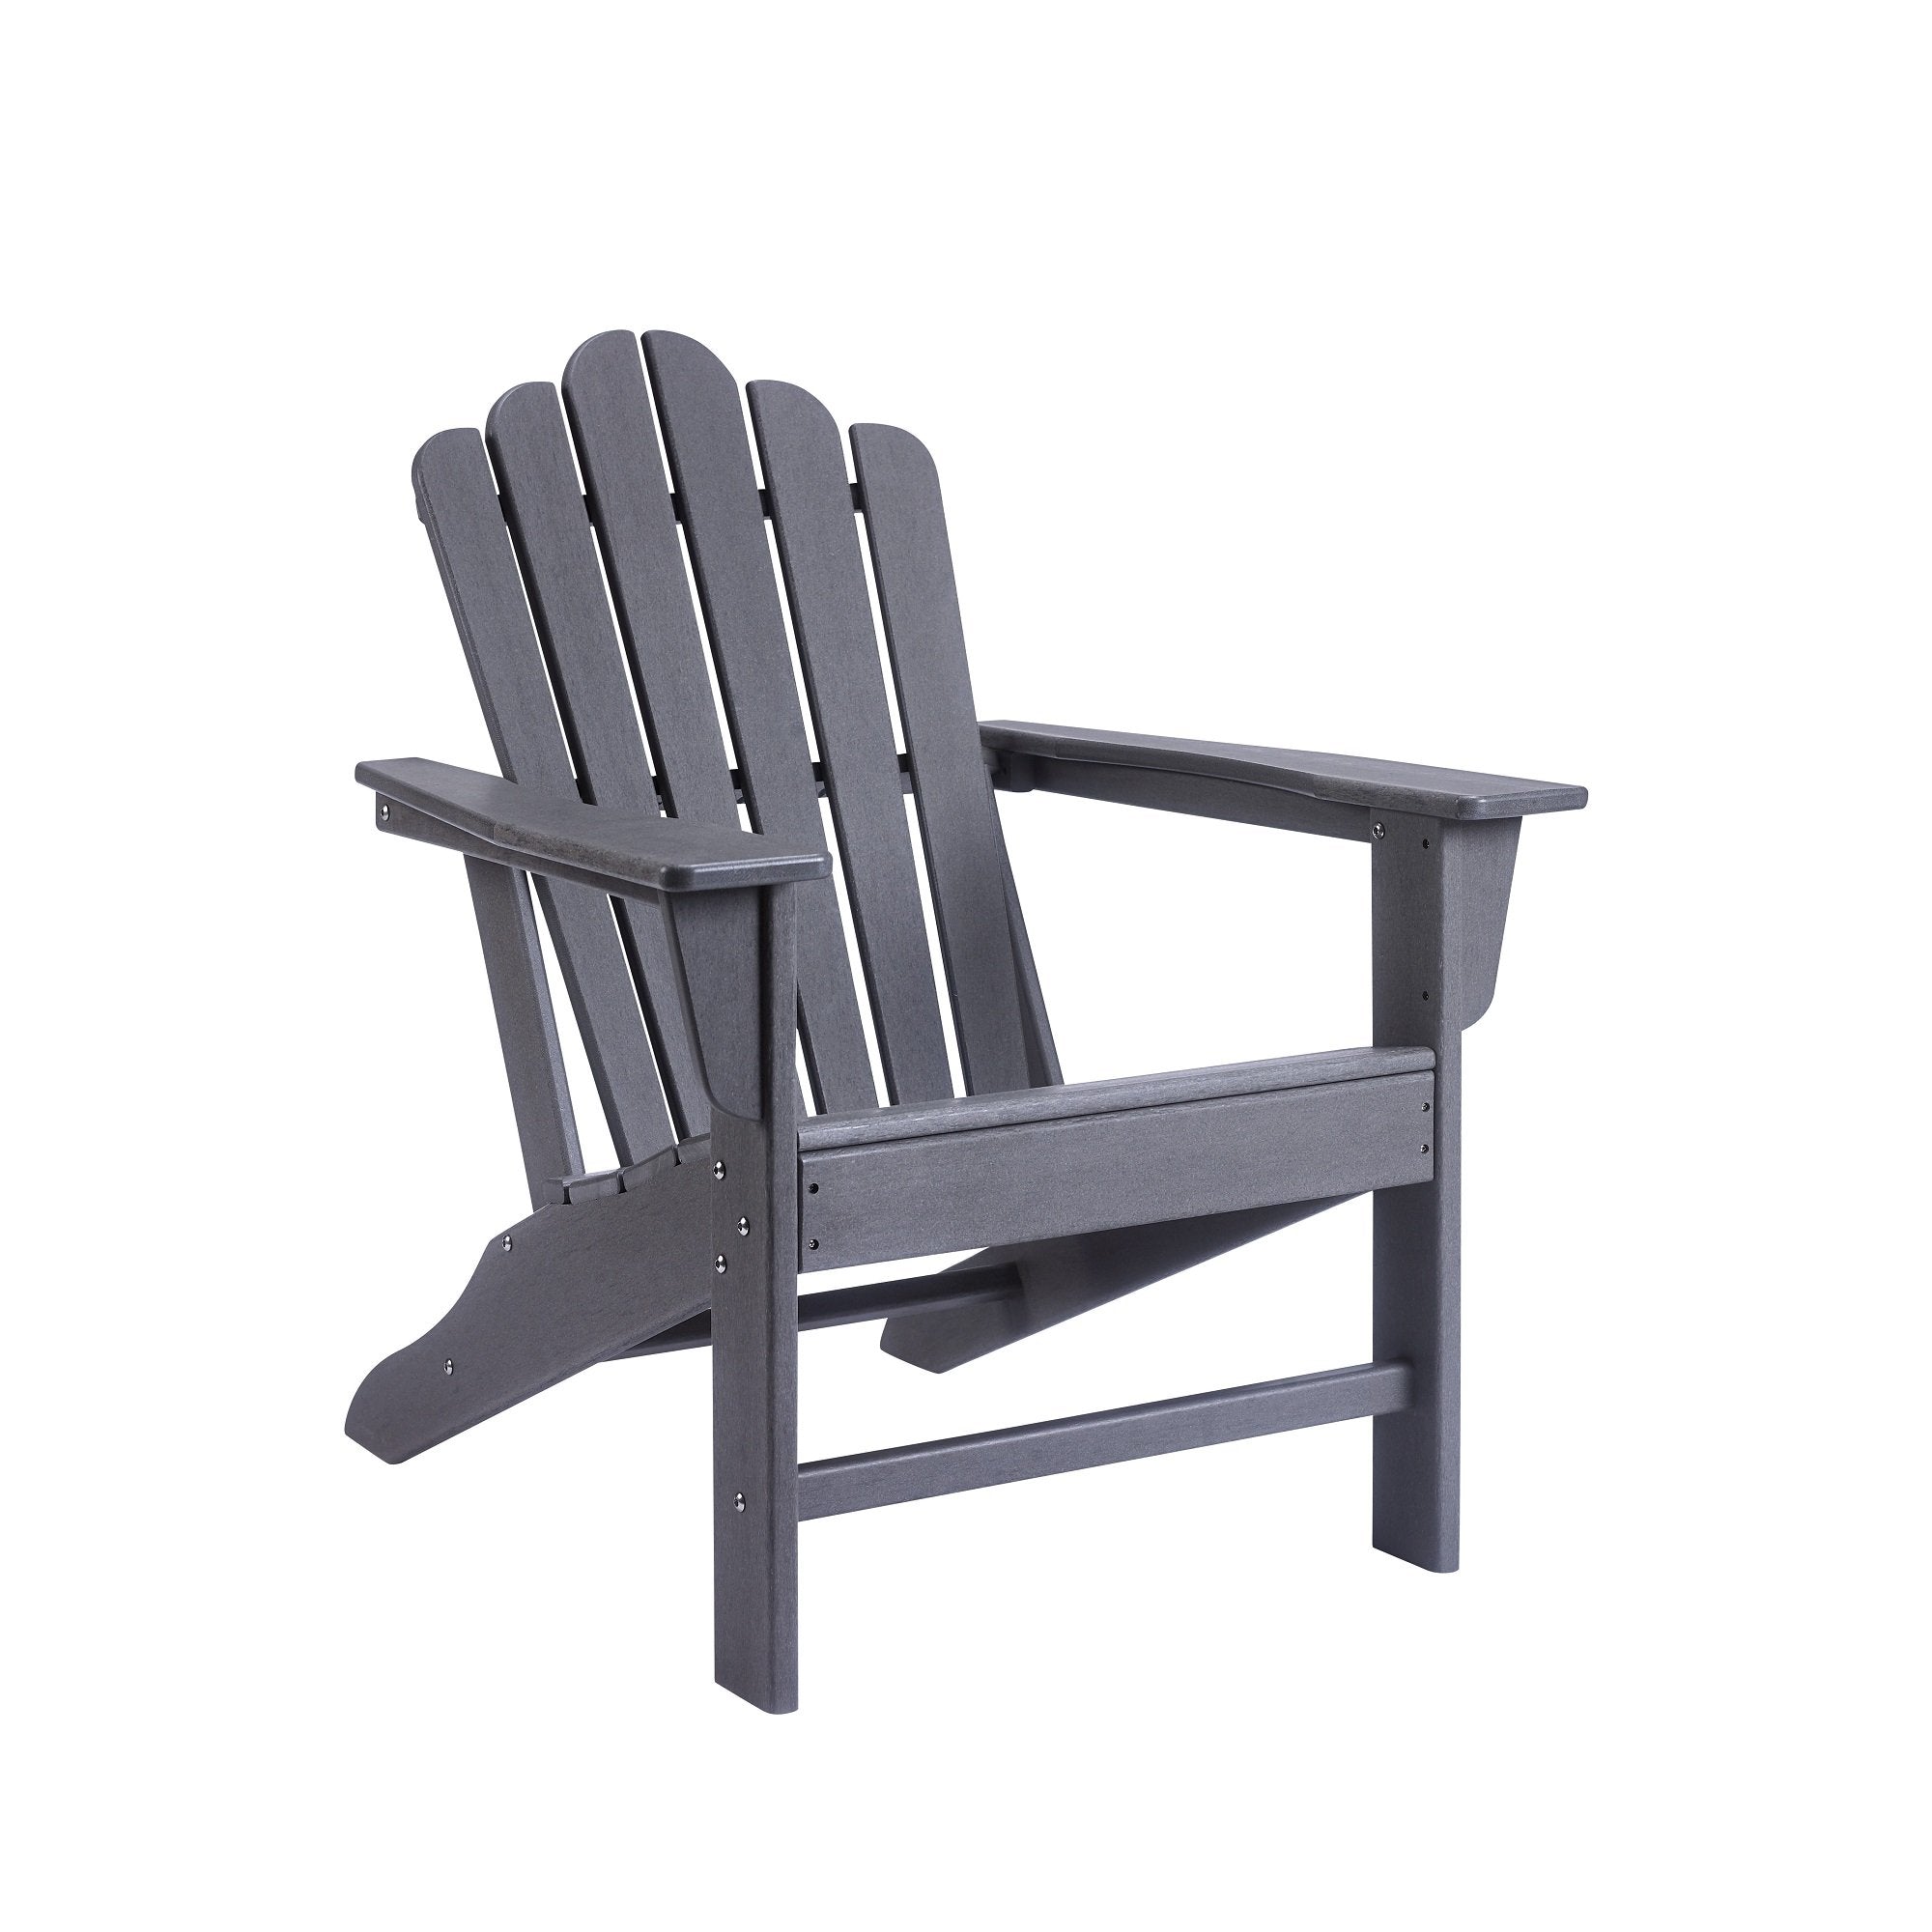 Classic Plastic Outdoor  Adirondack Chair for Outdoor Garden Porch Patio Deck Backyard